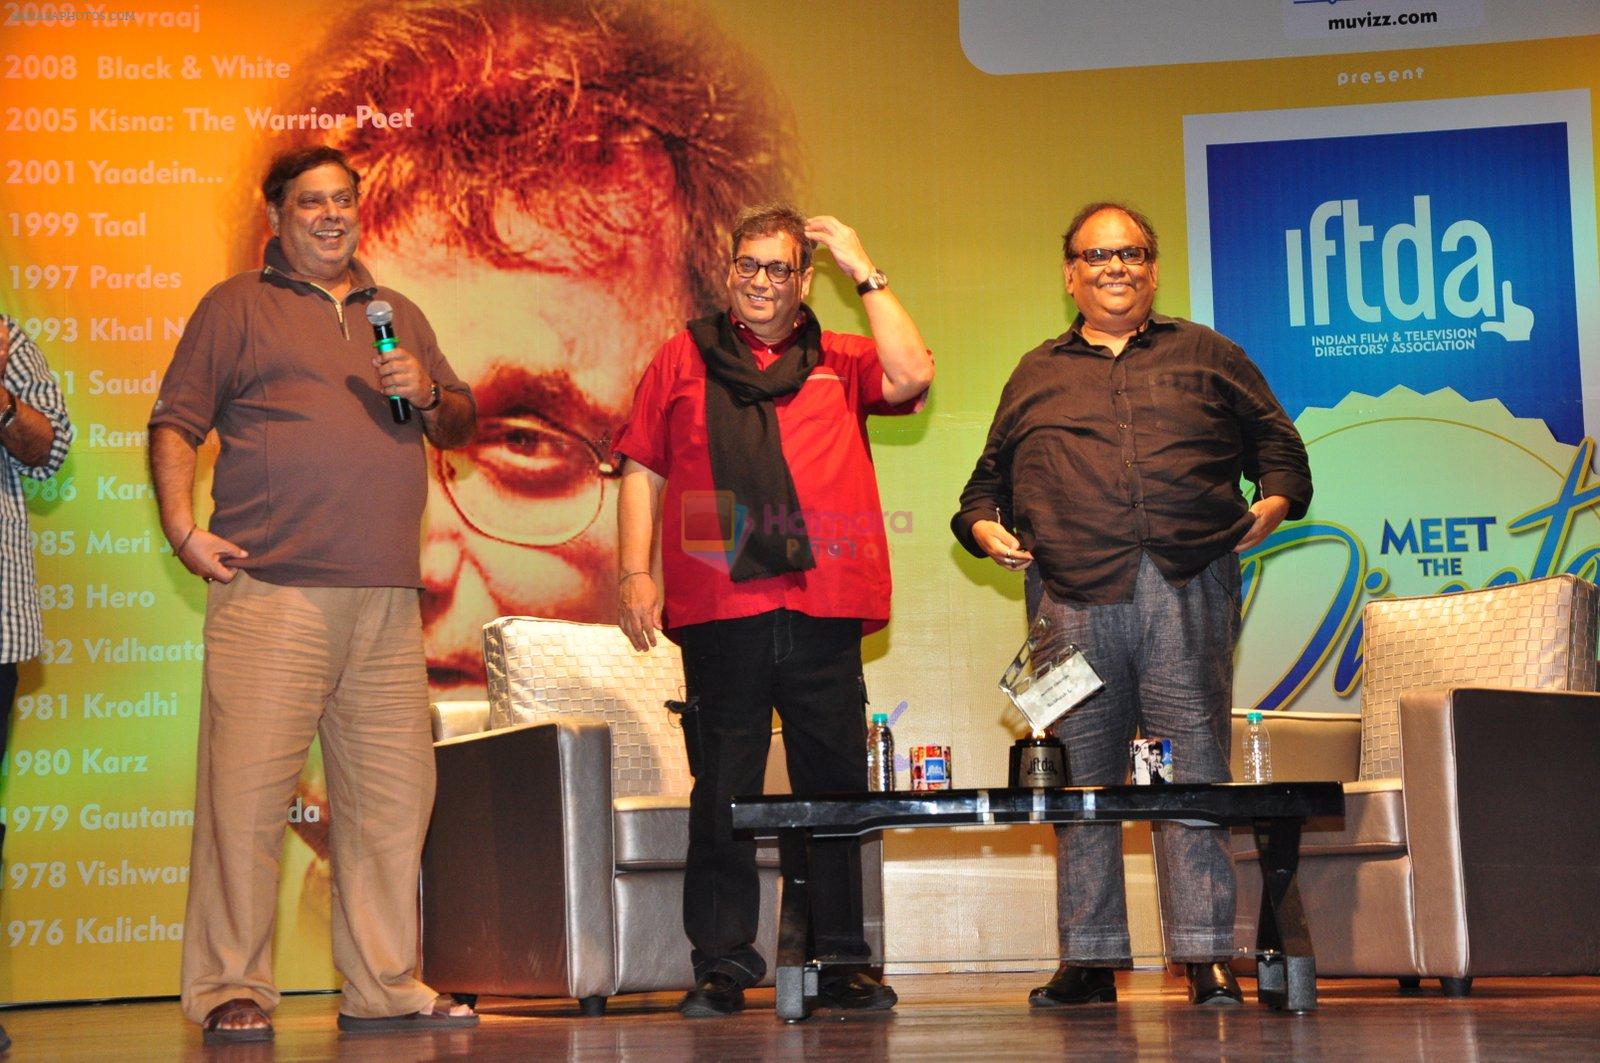 Subhash Ghai, Satish Kaushik, David Dhawan at Indian Film and Television Directors Association Meet on June 18, 2016